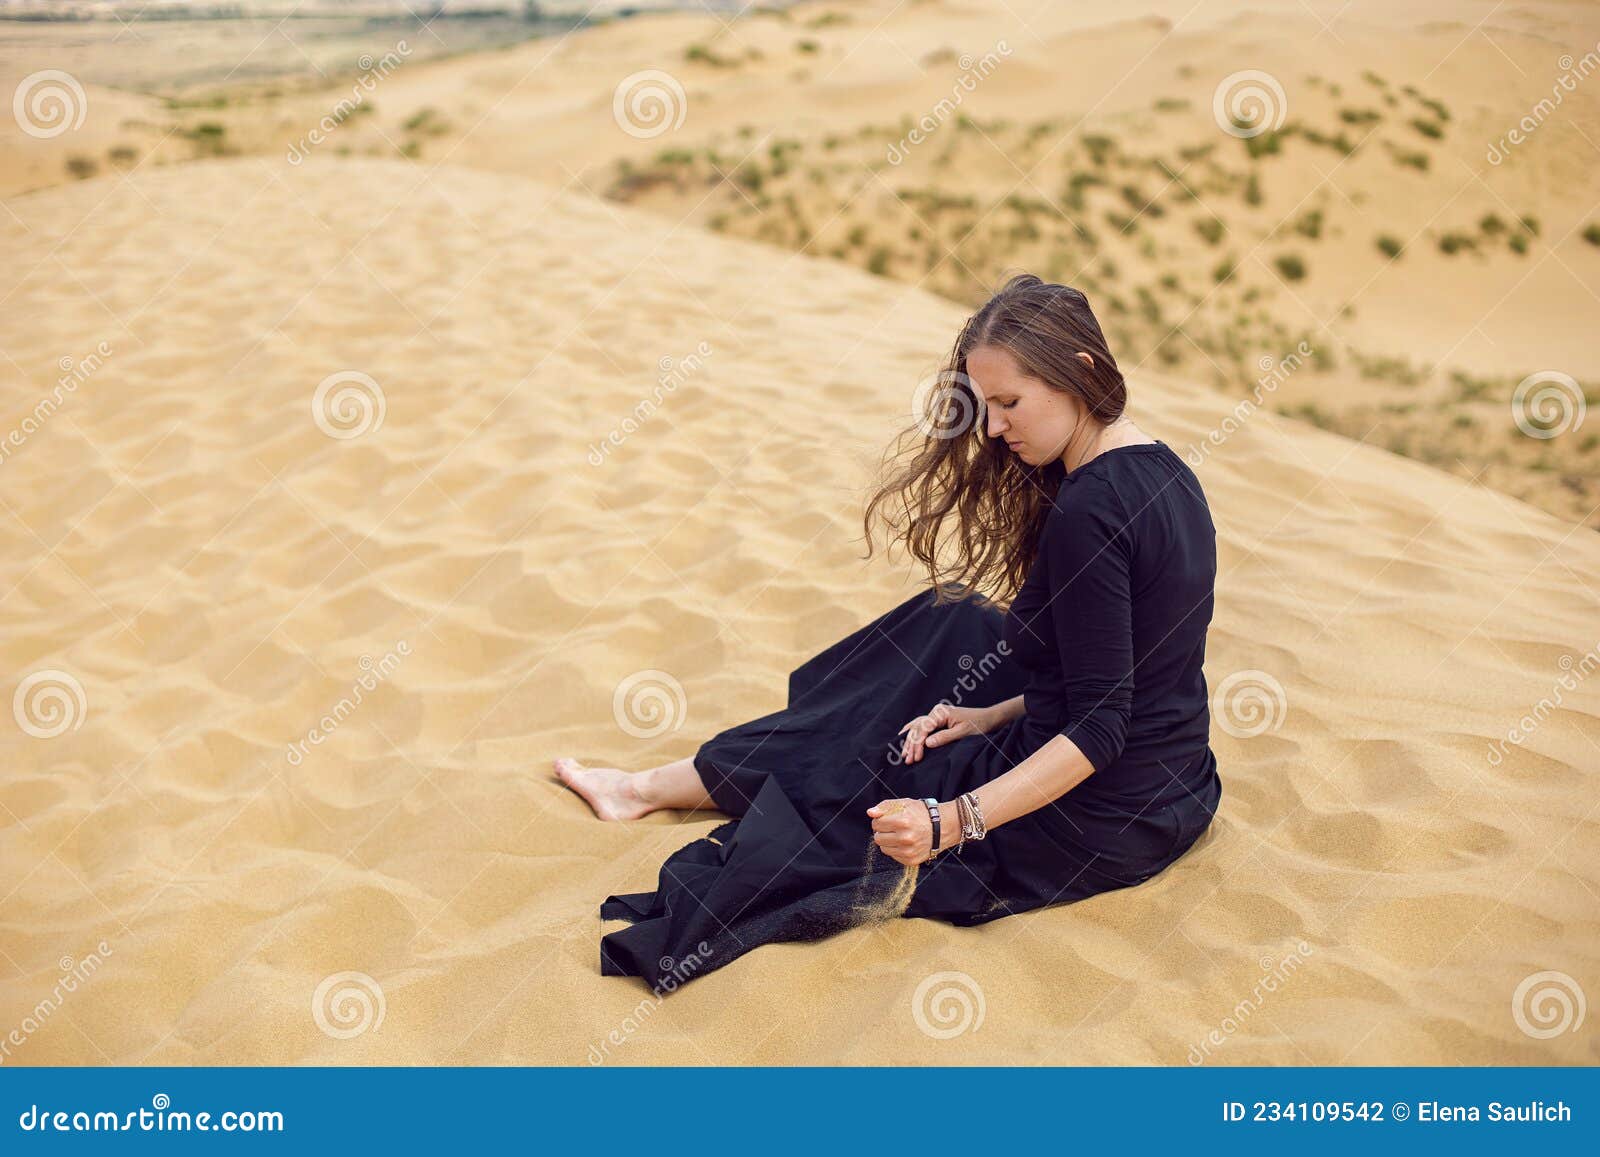 Woman In Black Long Dress Sit Through The Desert Dunes In Summer